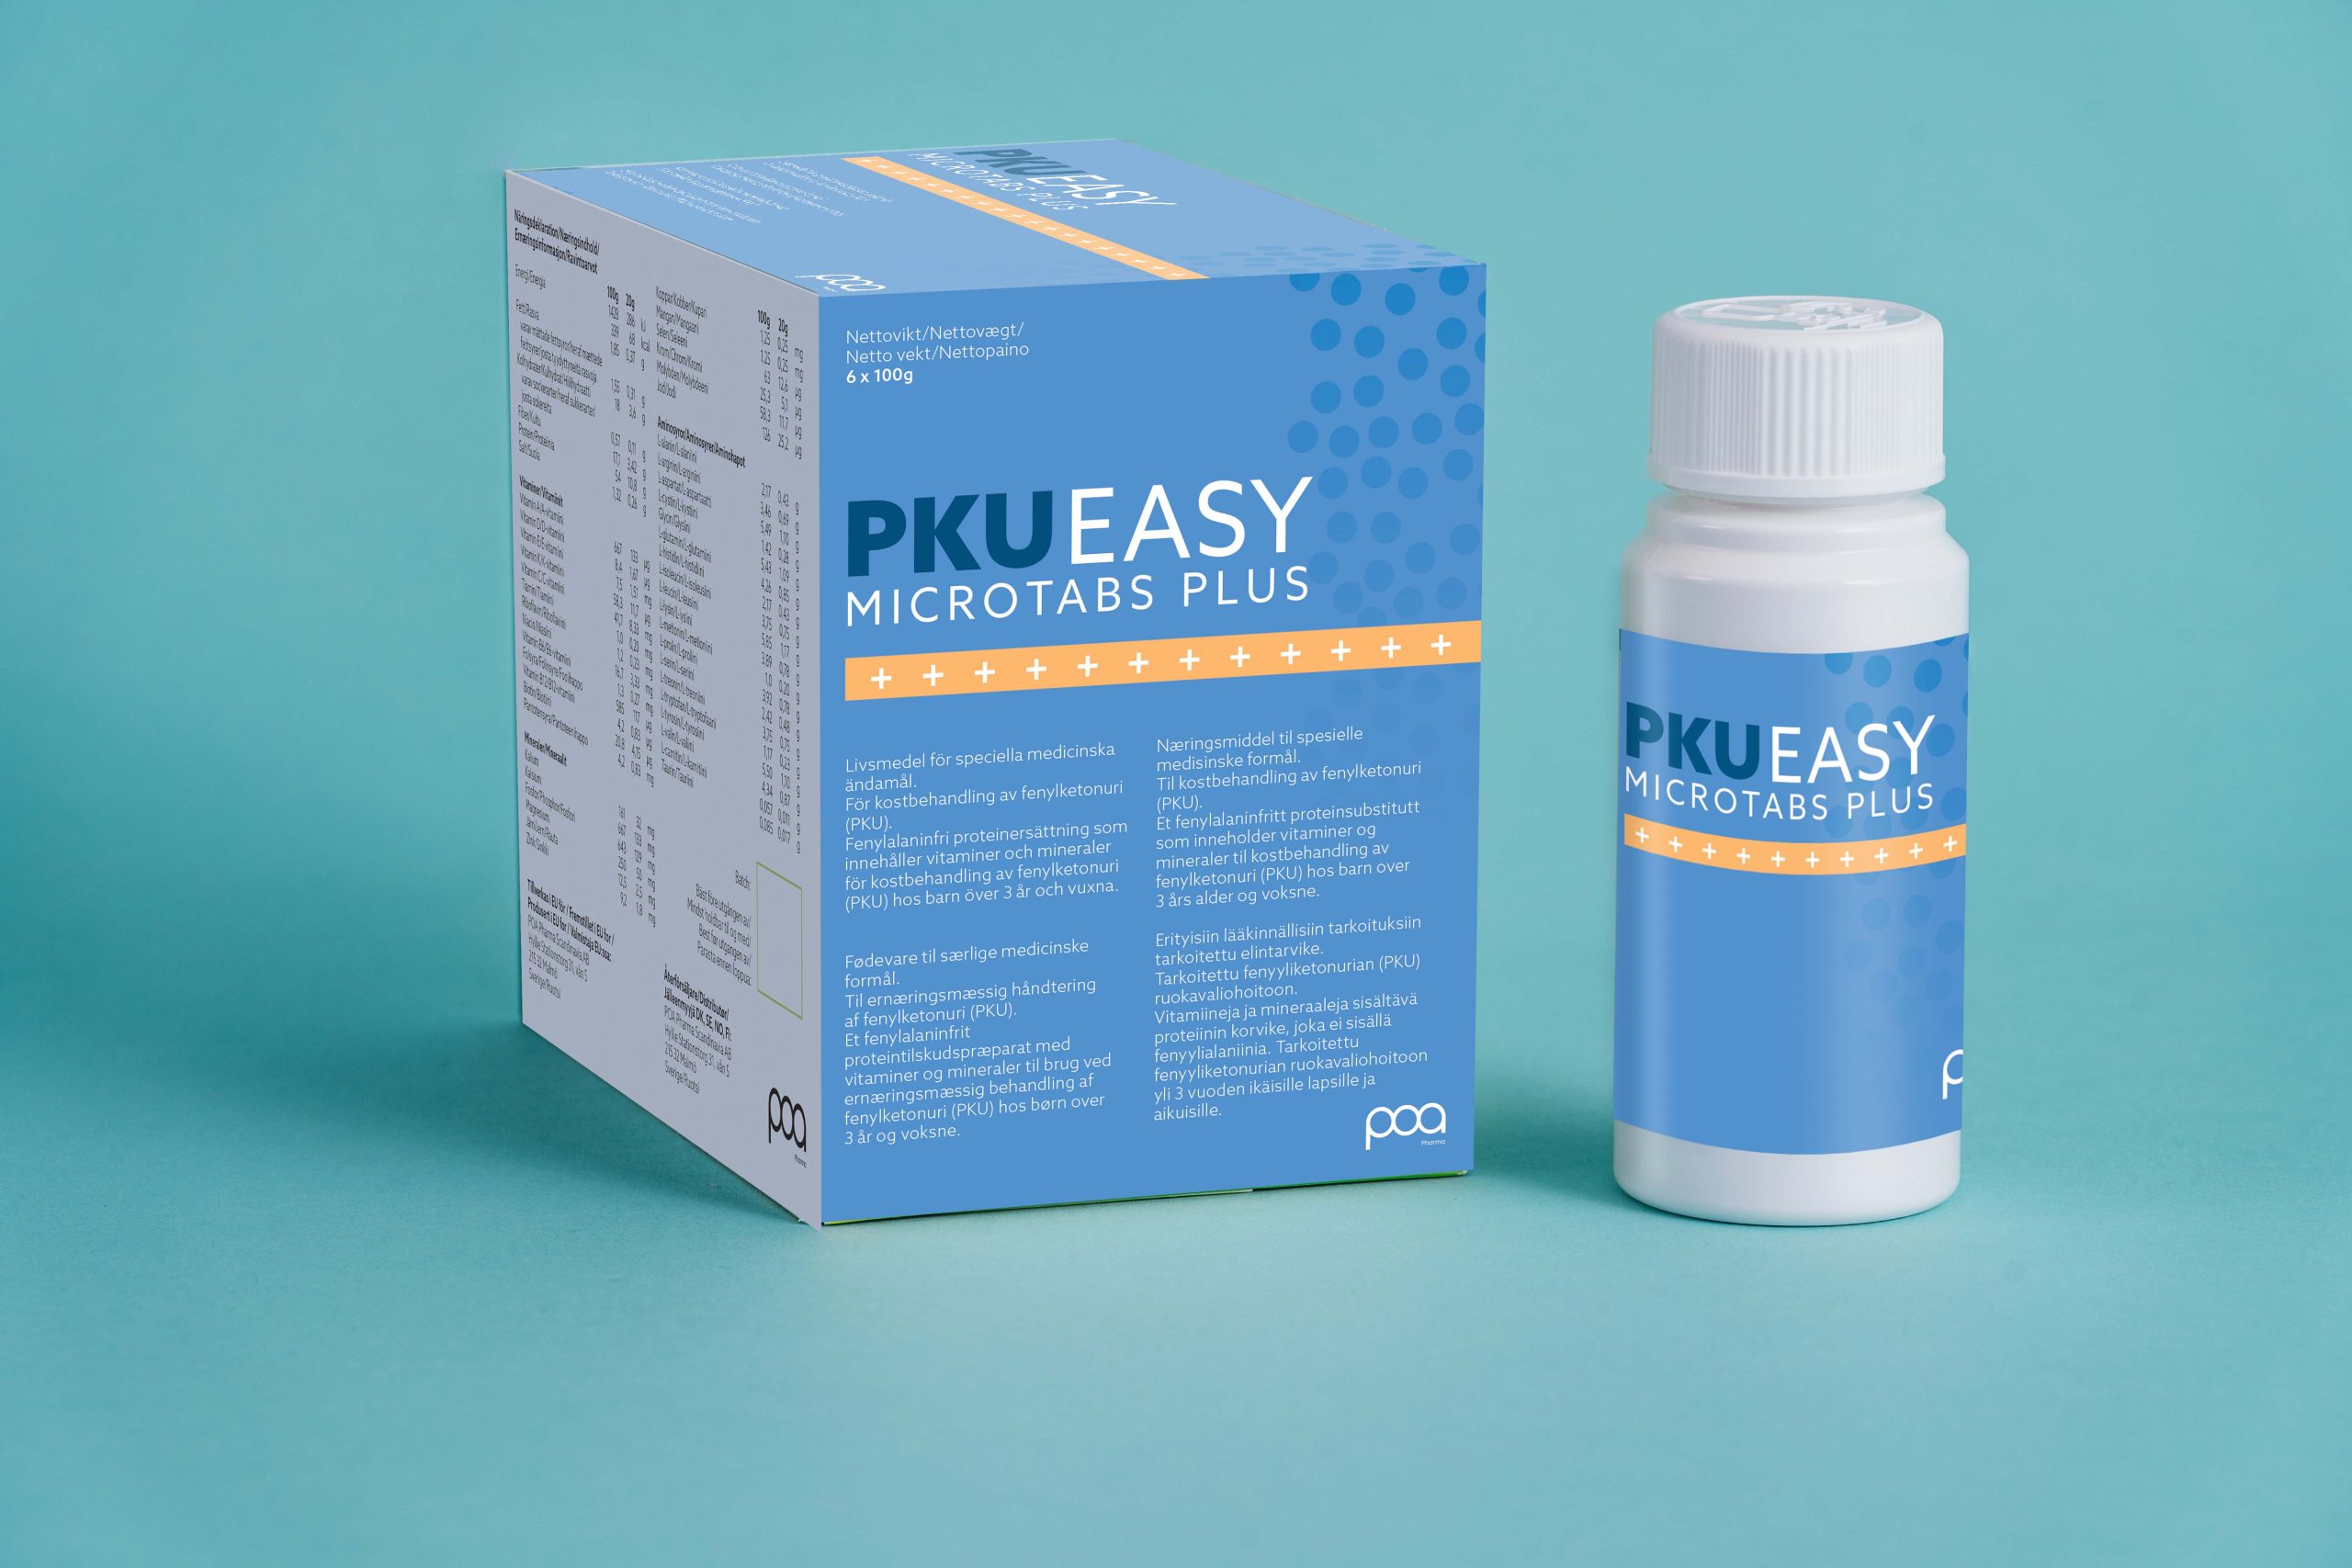 PKU EASY Microtabs Plus